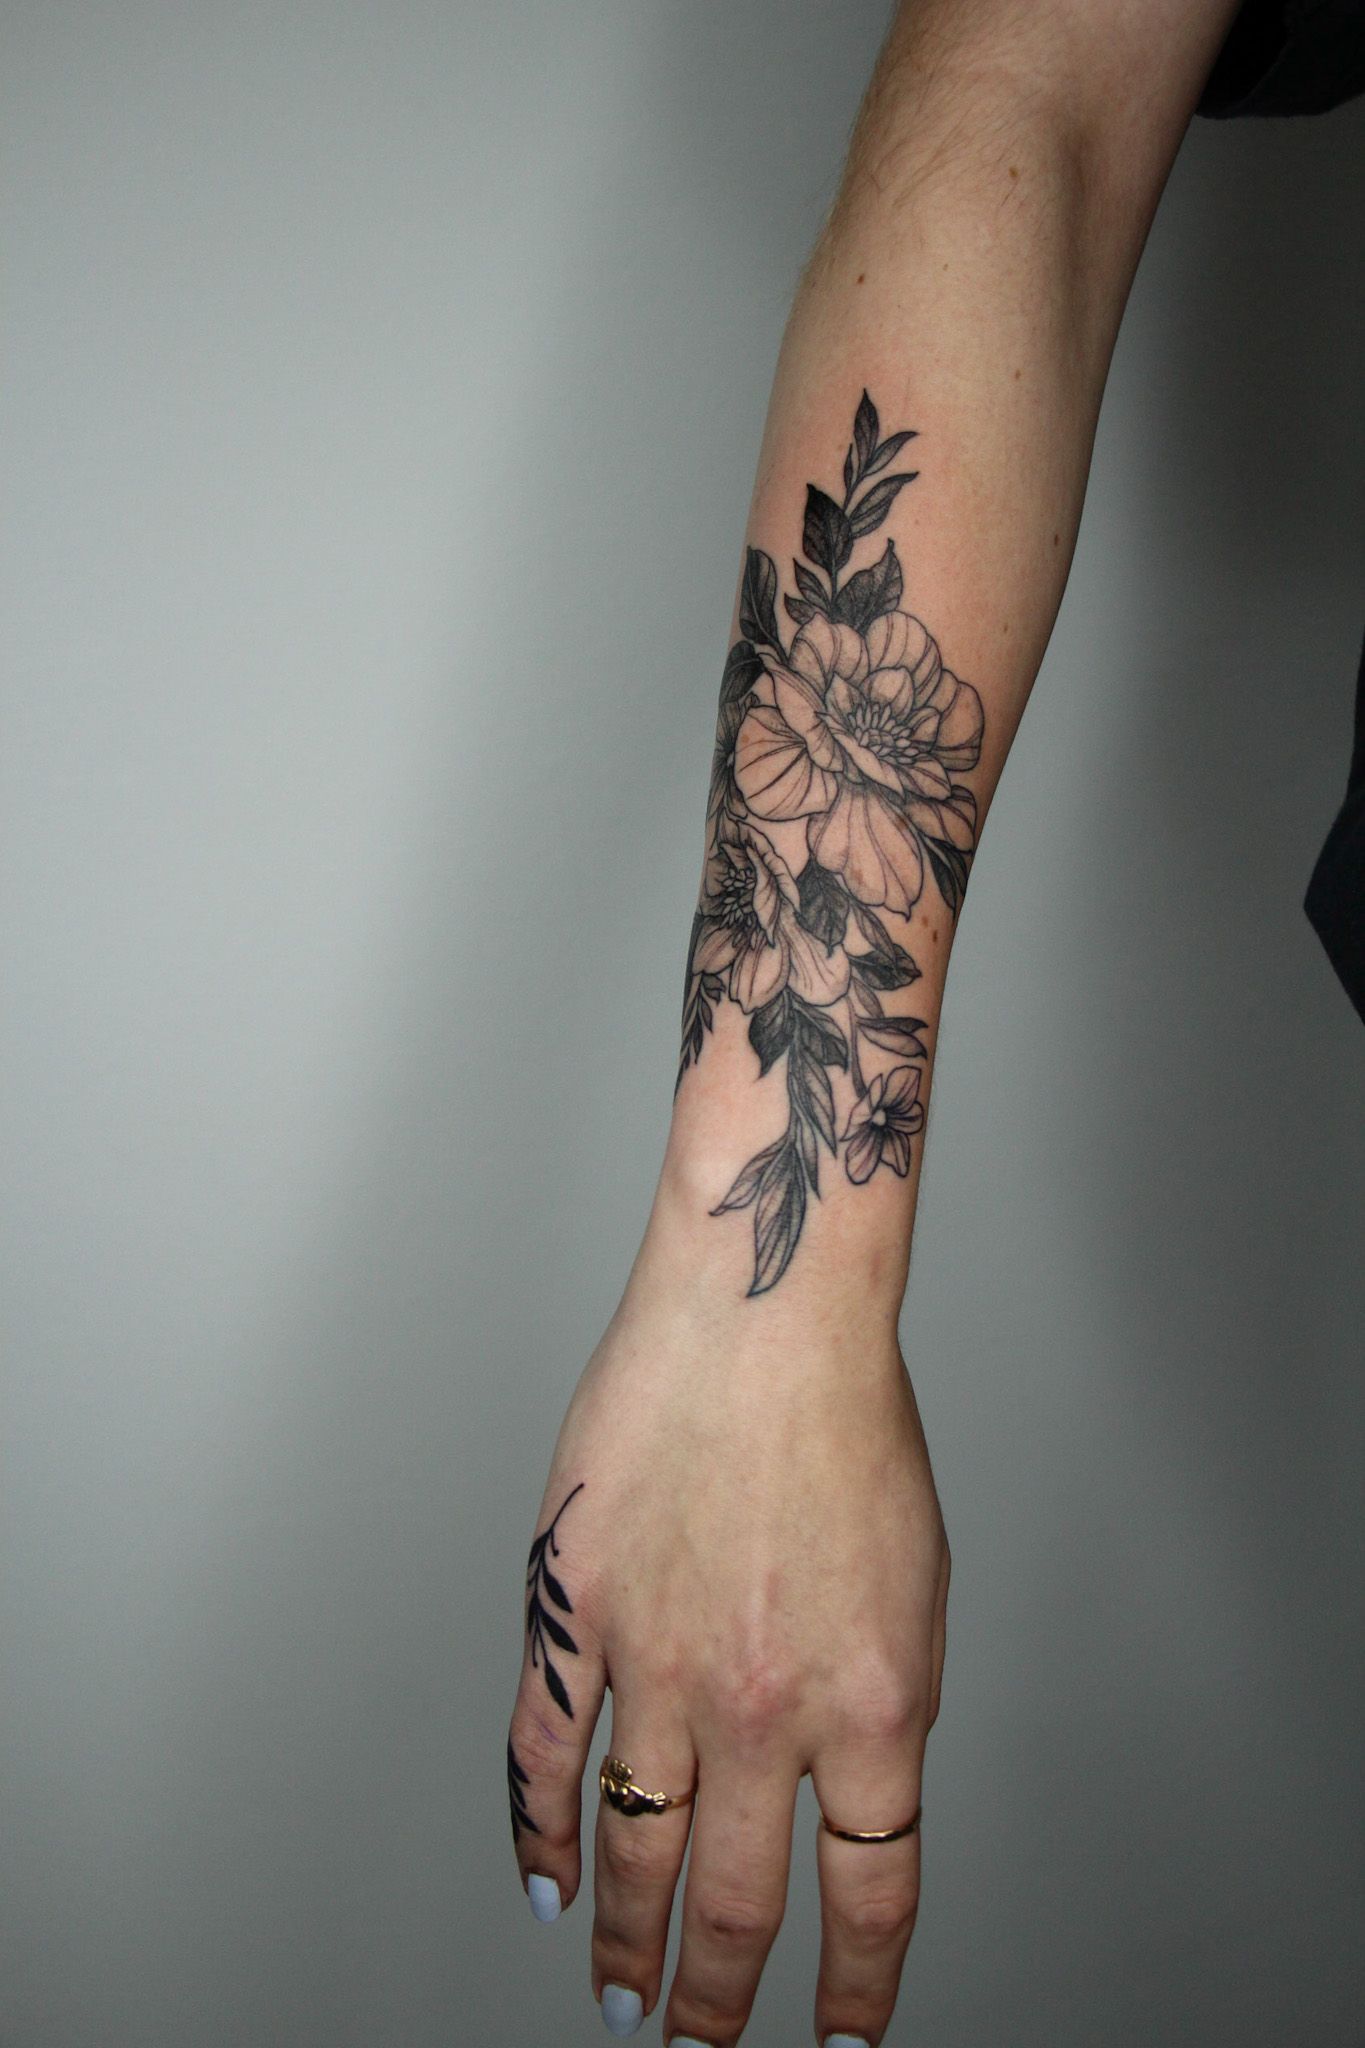 61 Elegant Tattoo Designs All Introverted Women Will Love - TattooBlend